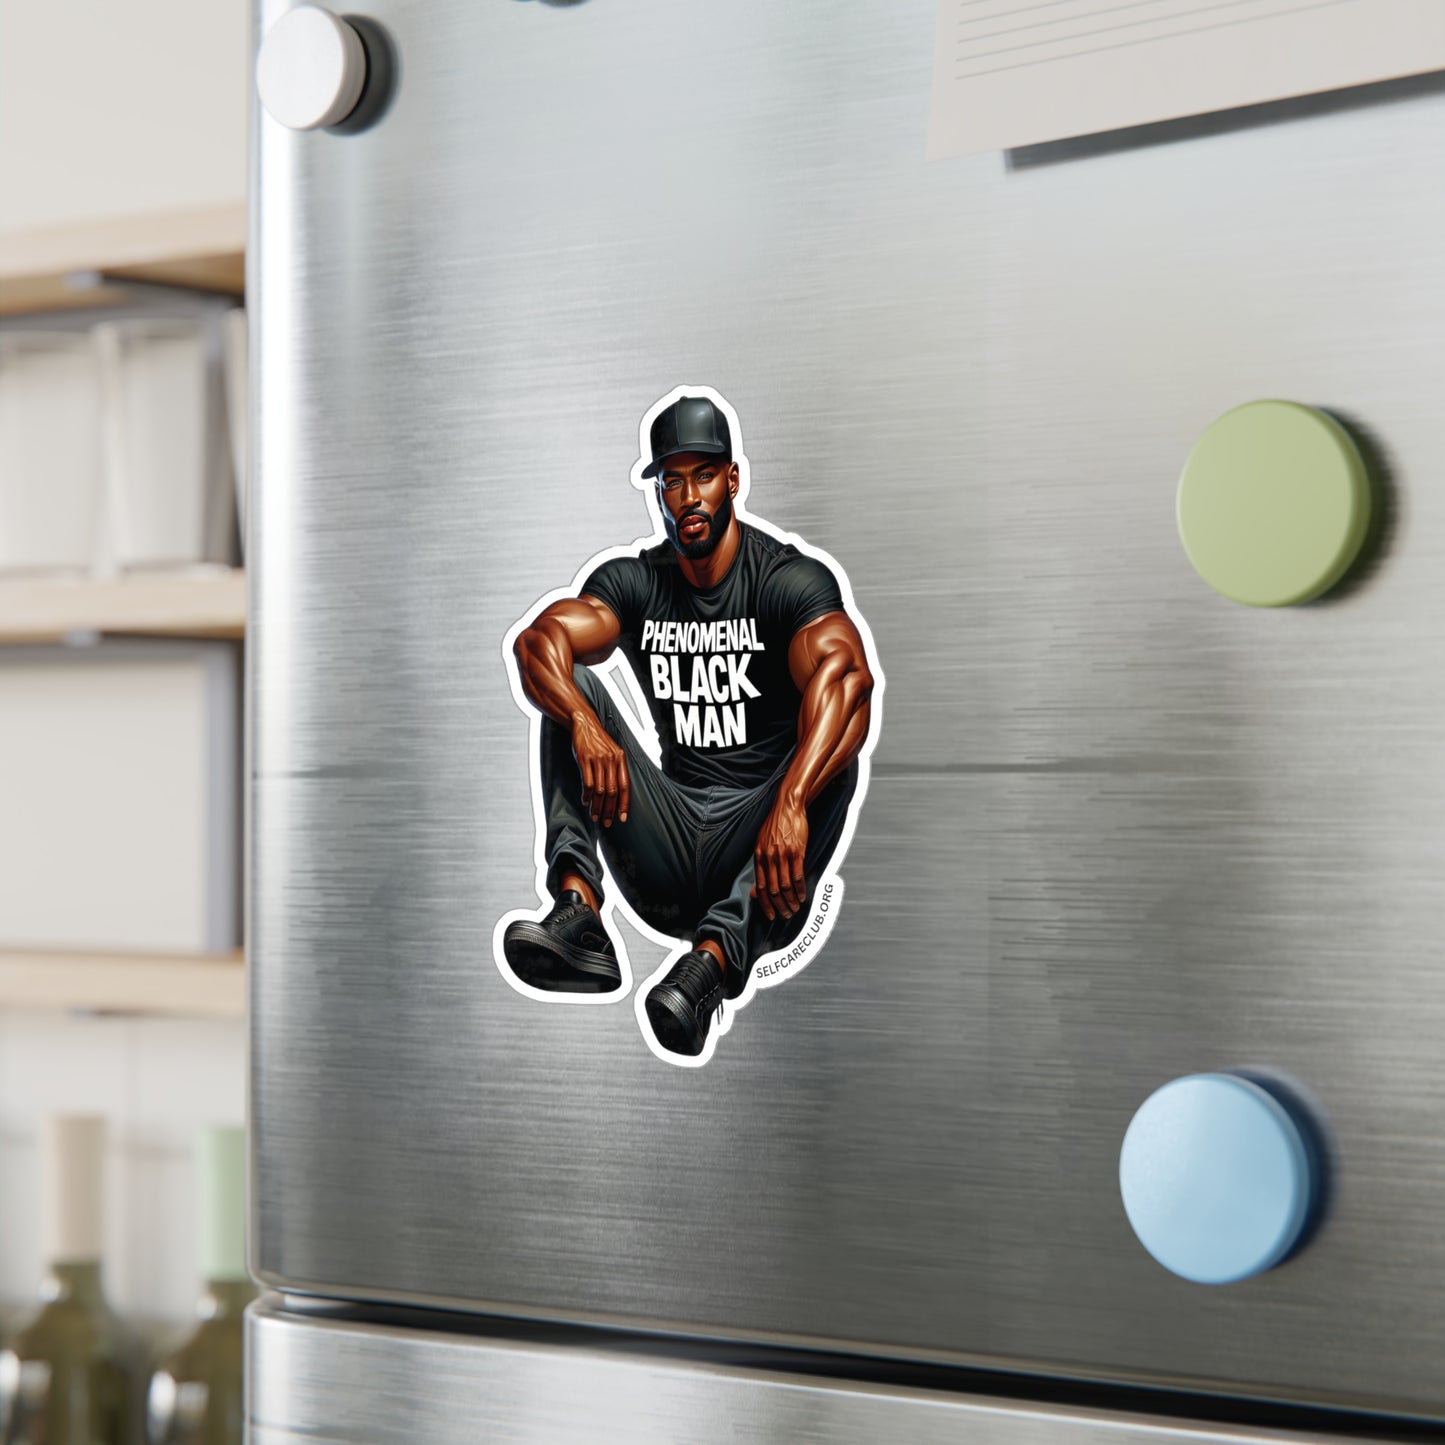 Phenomenal Black Man Sticker